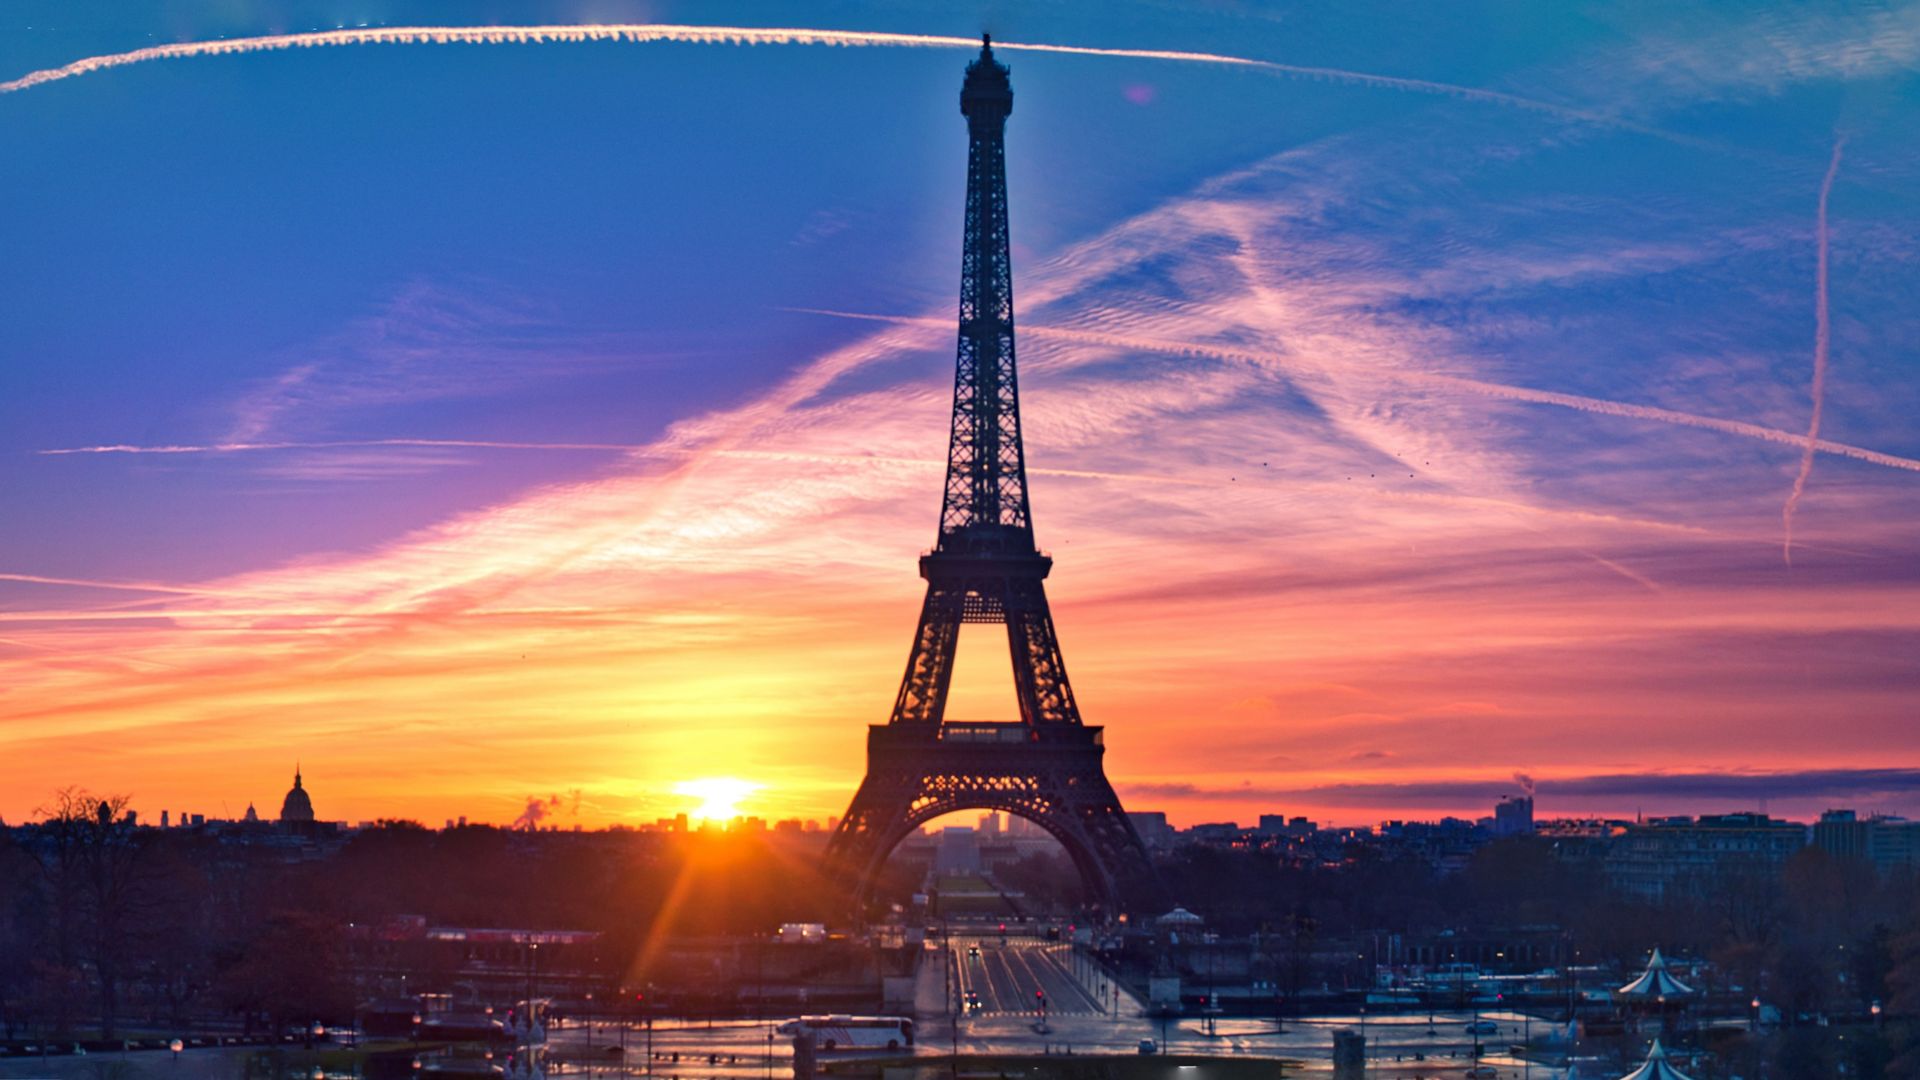 Sunrise at The Eiffel Tower in Paris